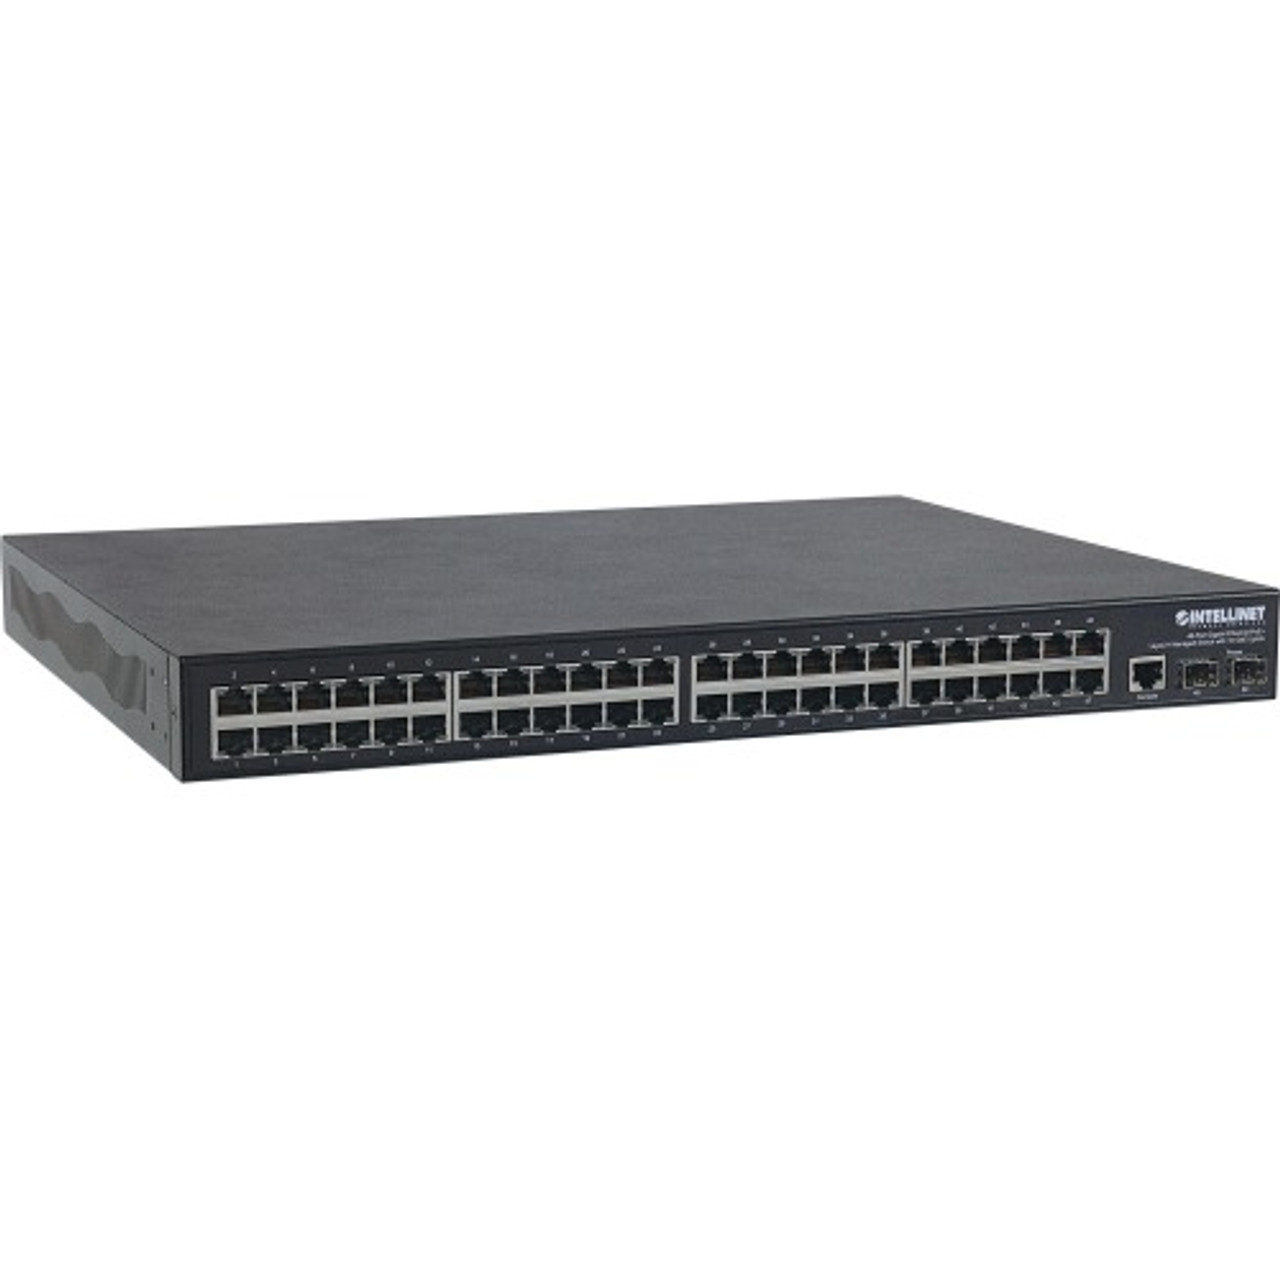 561112 Intellinet Network 48-Ports Gigabit Ethernet PoE+ Layer2+ Managed Switch with 2x 10GbE SFP+ Uplink Ports (Refurbished)